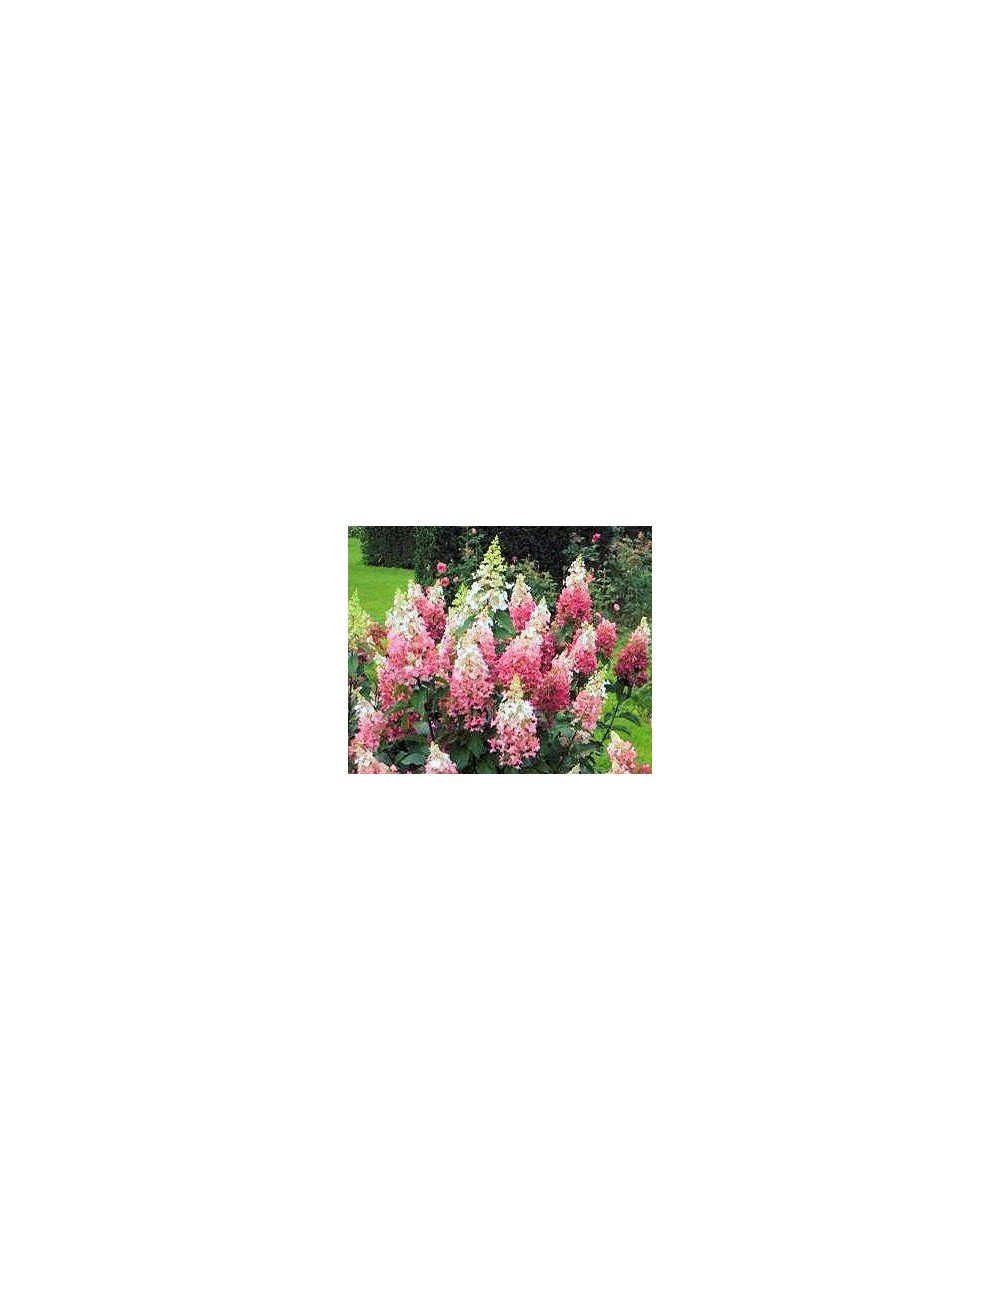 Hydrangea Paniculata Pinky Winky